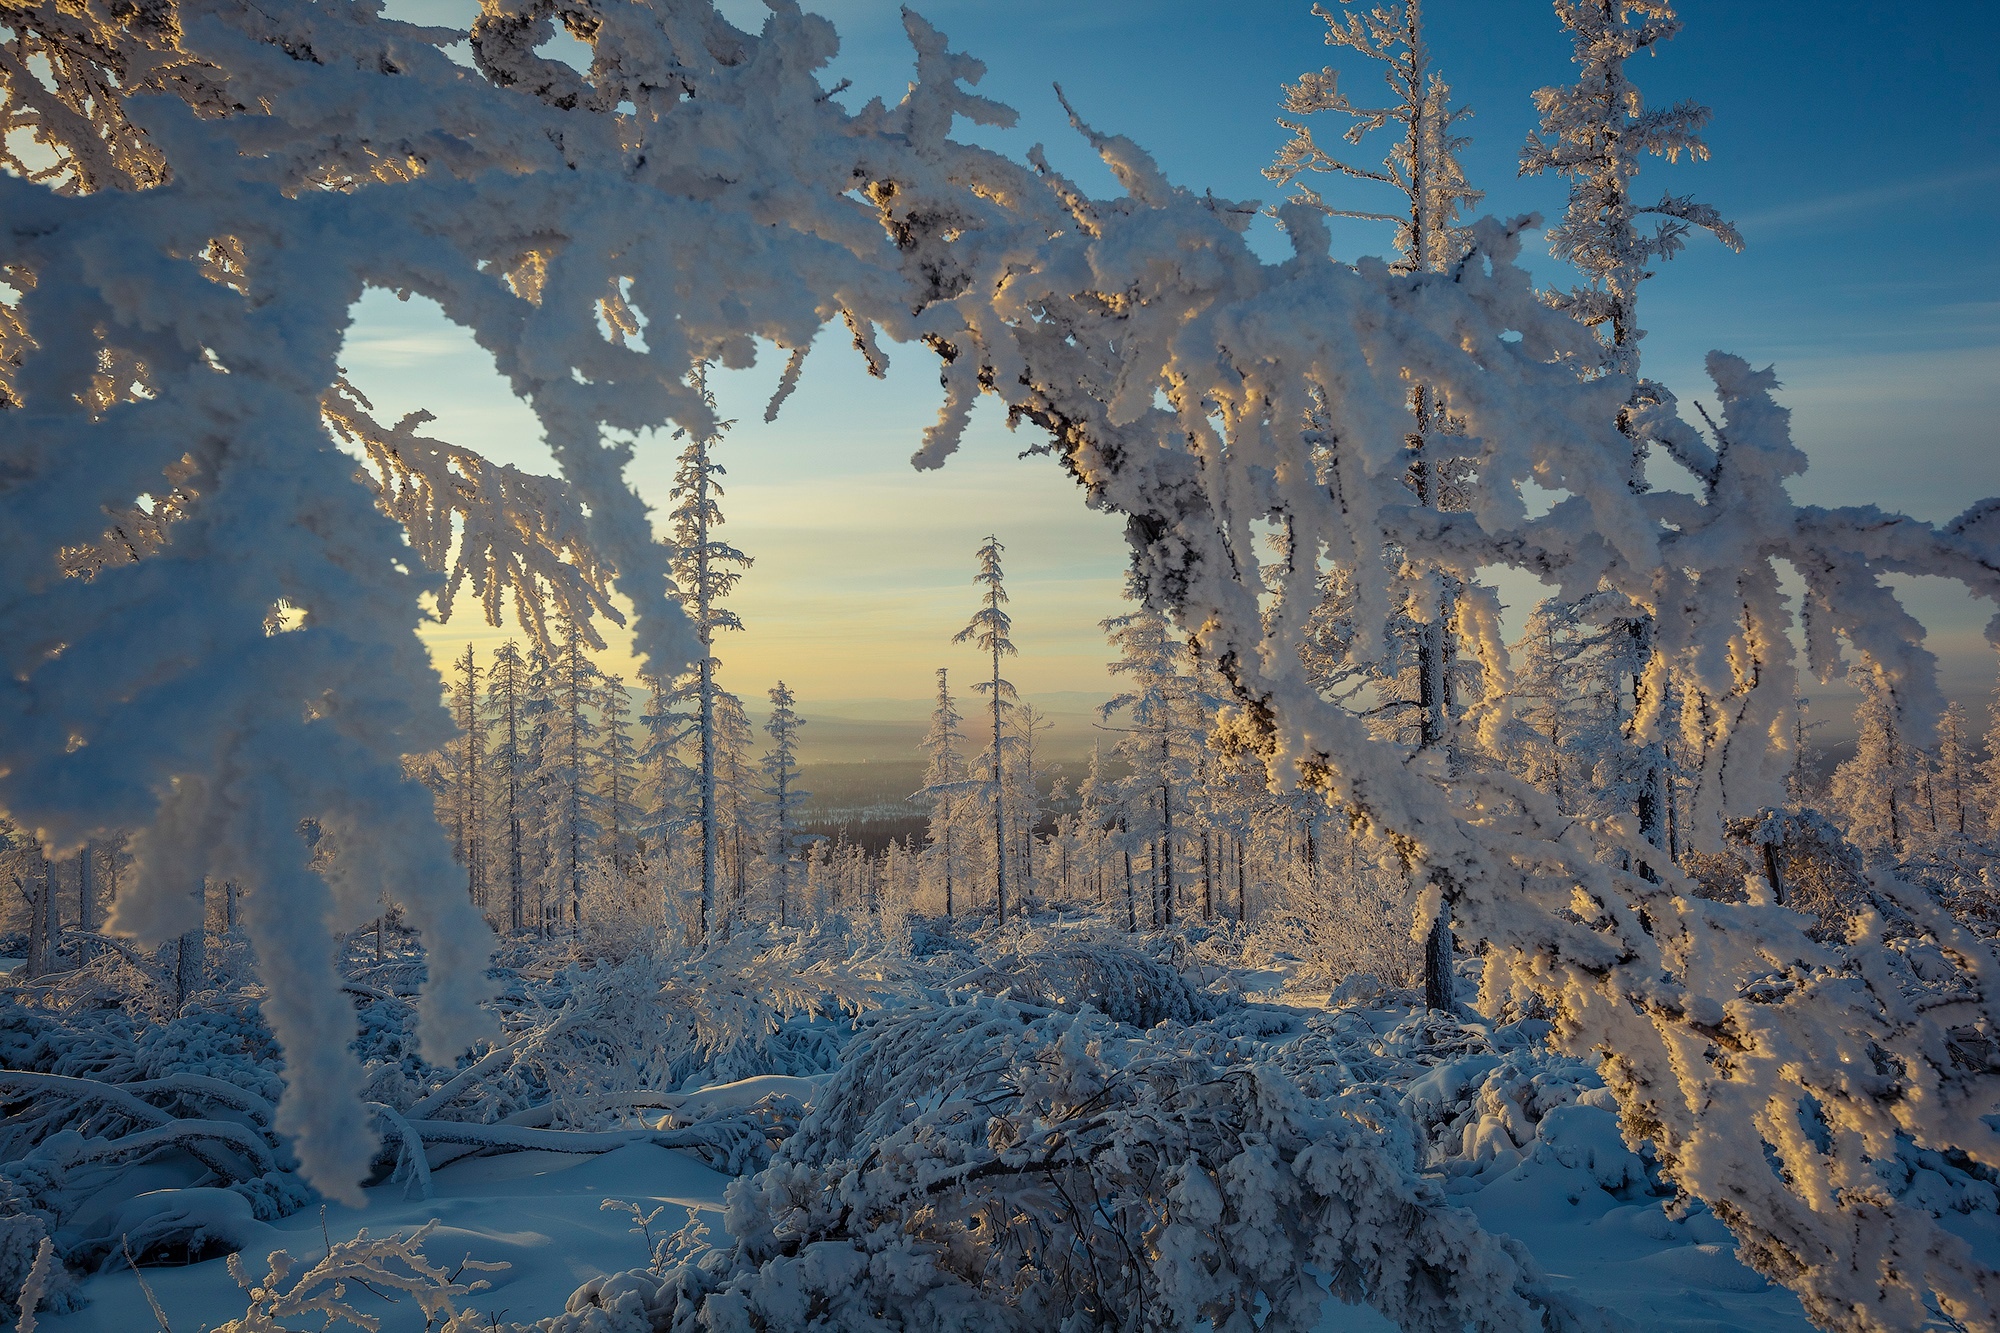 Снежка россия. Оймякон пейзаж. Зимний пейзаж. Зима в лесу. Красивый зимний лес.